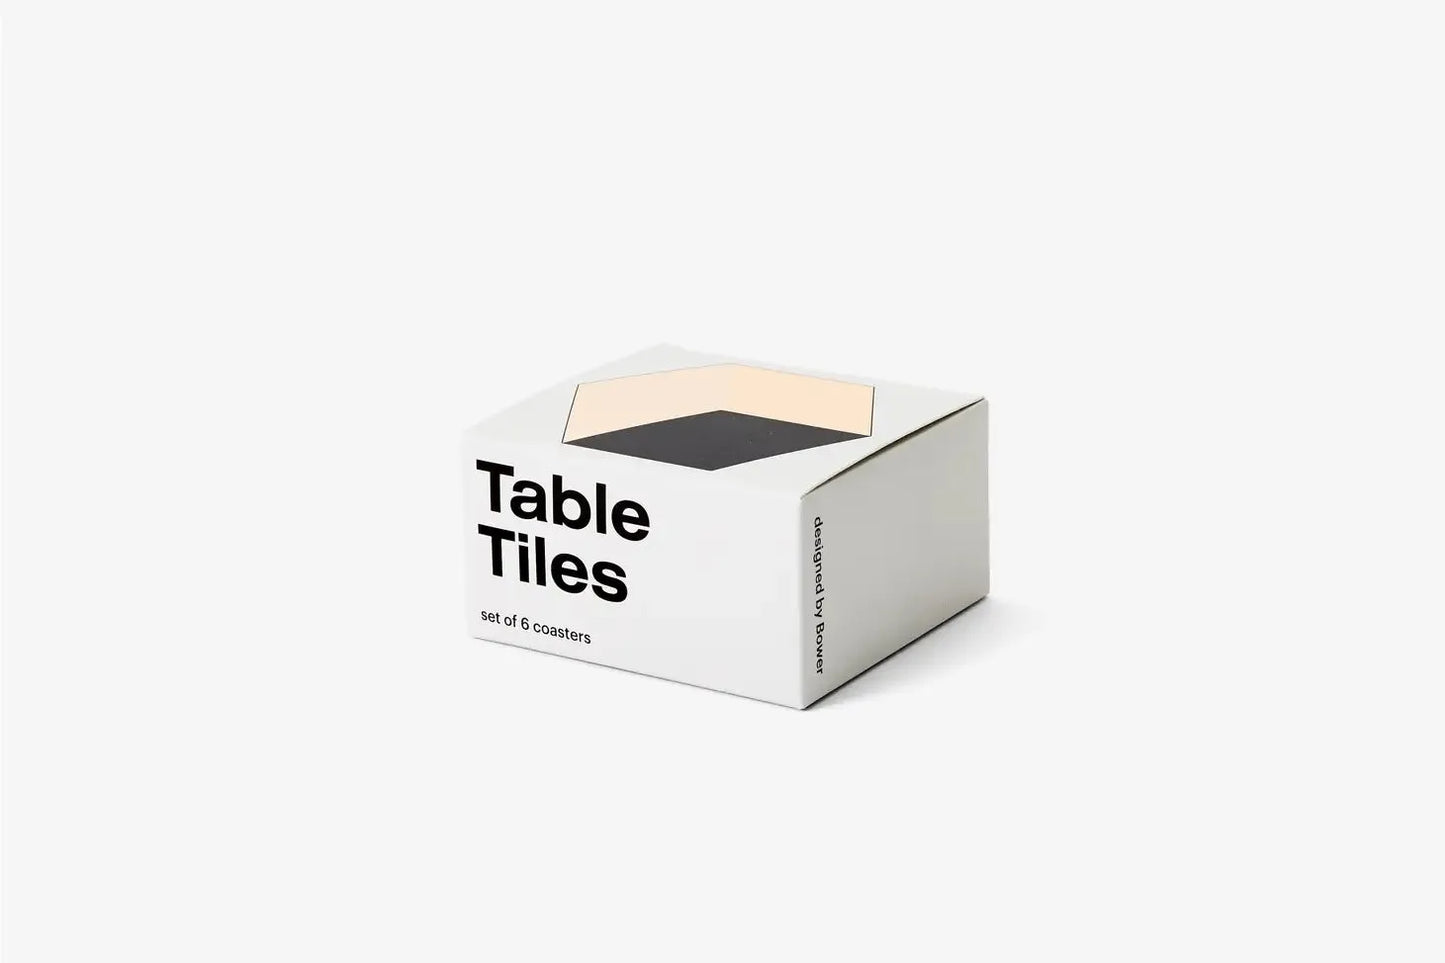 Set of Six Coasters - Table tiles